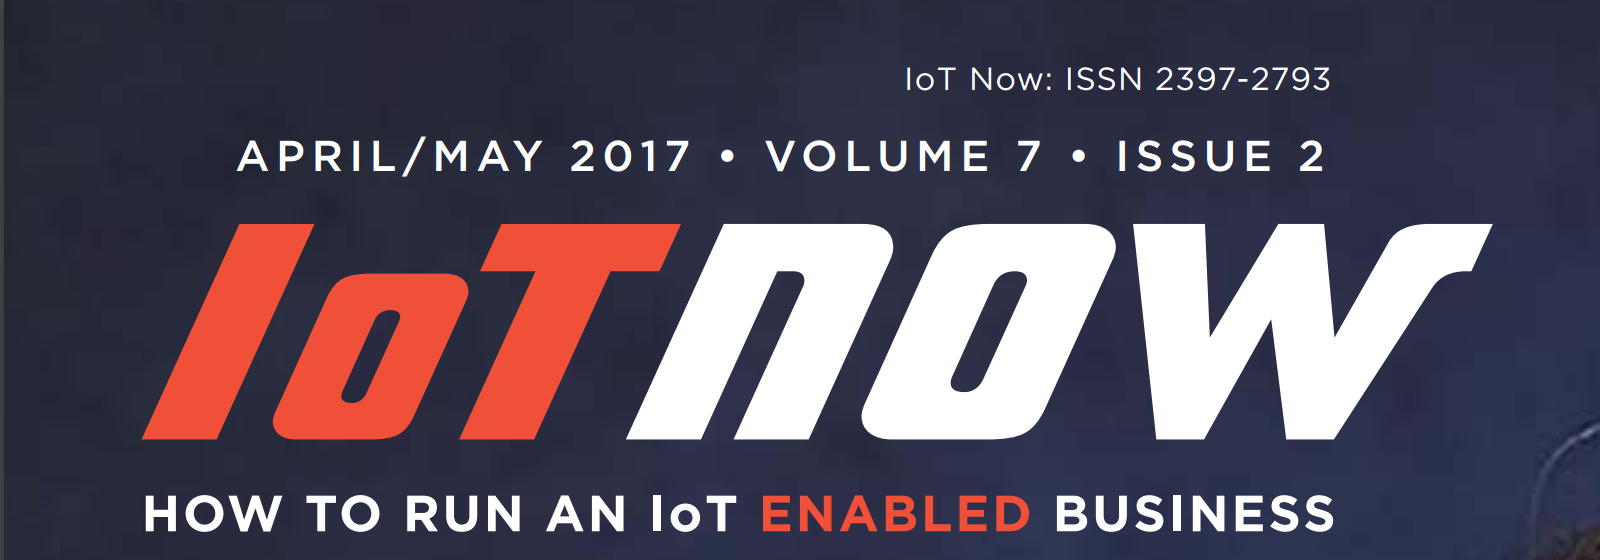 IoT Now - Security